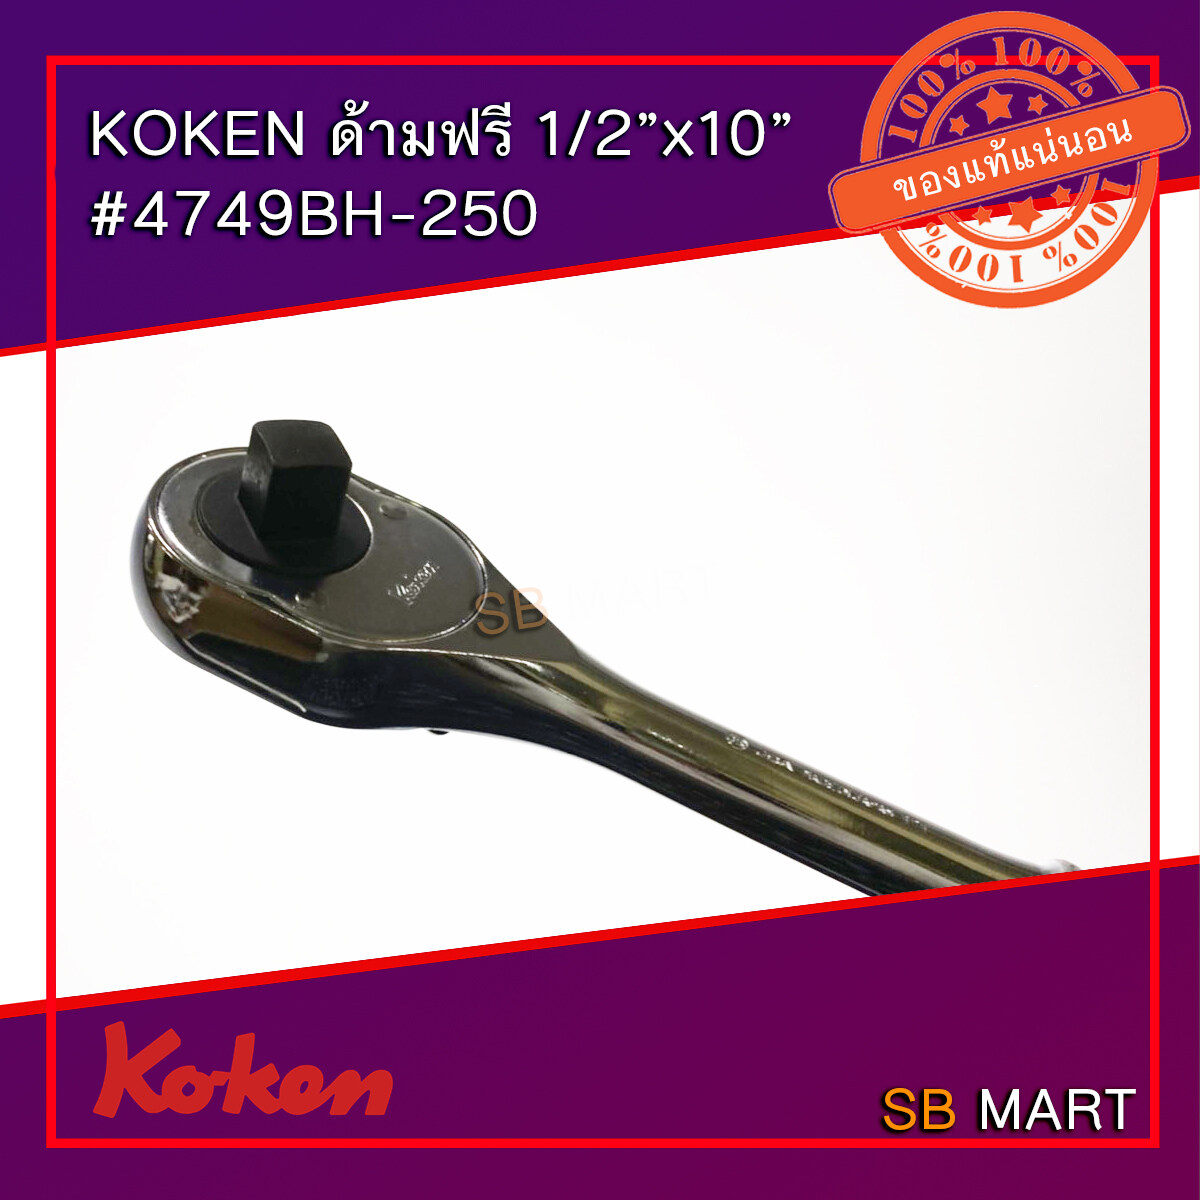 Koken Koken ราคาถูก ซื้อออนไลน์ที่ - ส.ค. 2022 | Lazada.co.th